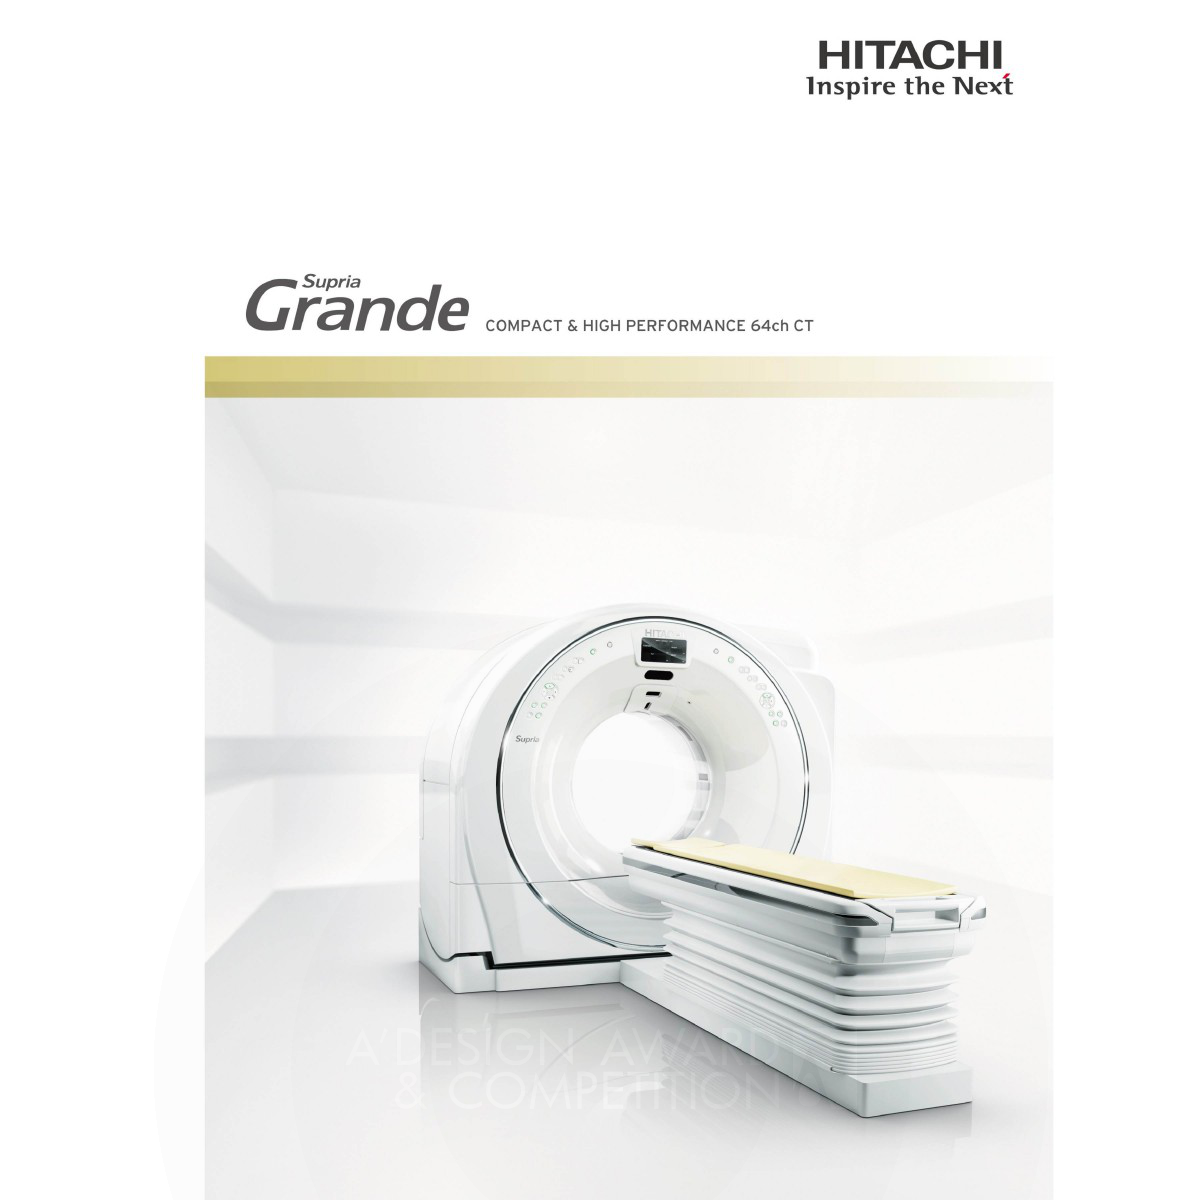 Hitachi-Medico Supria Brande Brochure by E-graphics communications